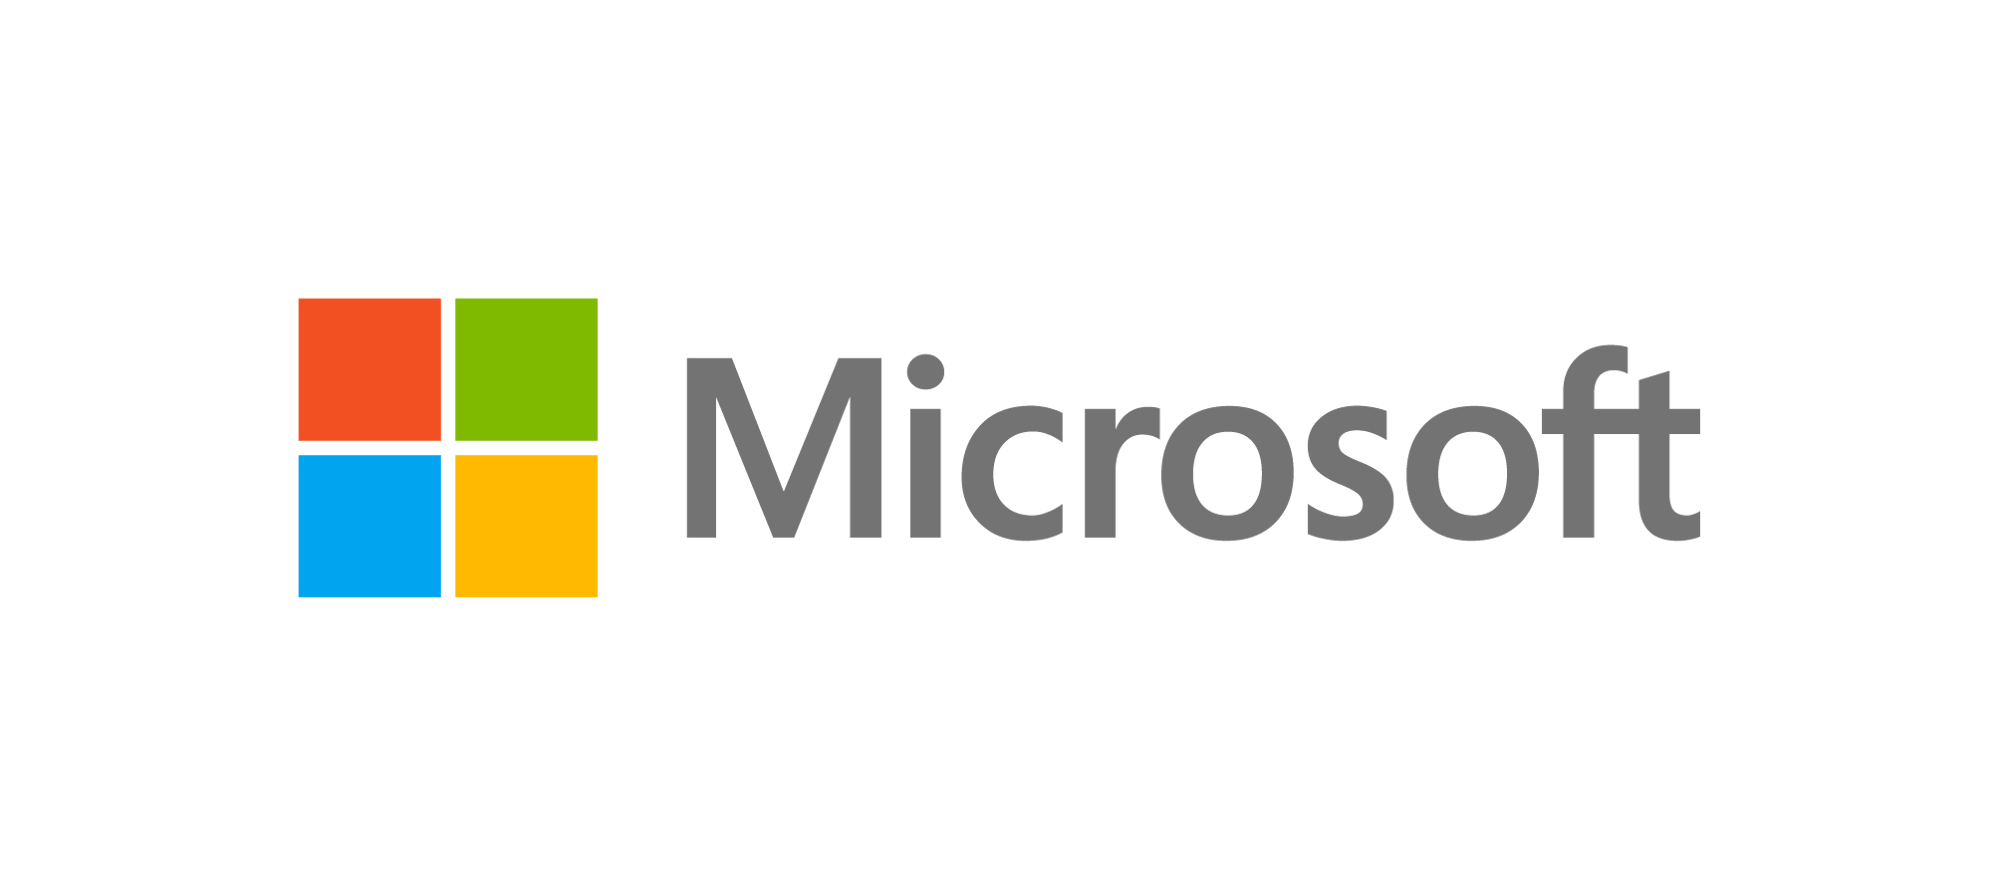 Microsoft-logo_rgb_c-gray (1)